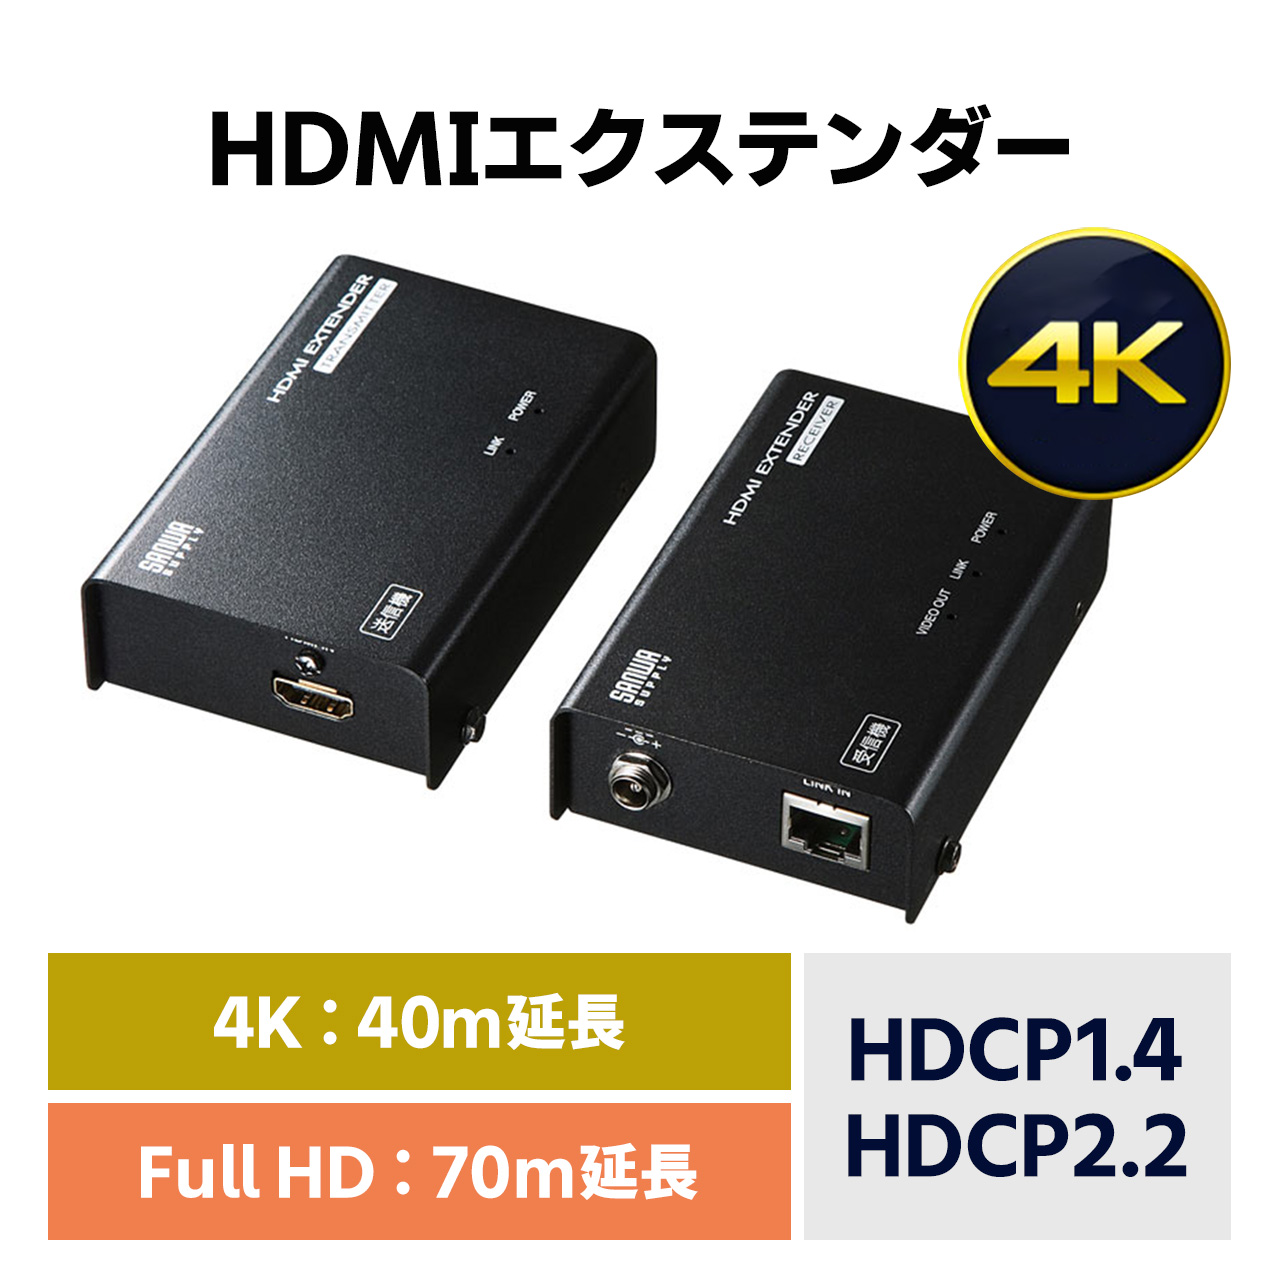 HDMIエクステンダー 送信機のみ 4K対応 最大40m先に4分配延長出力 サンワサプライ VGA-EXHDLTL4｜分配器、切替器 